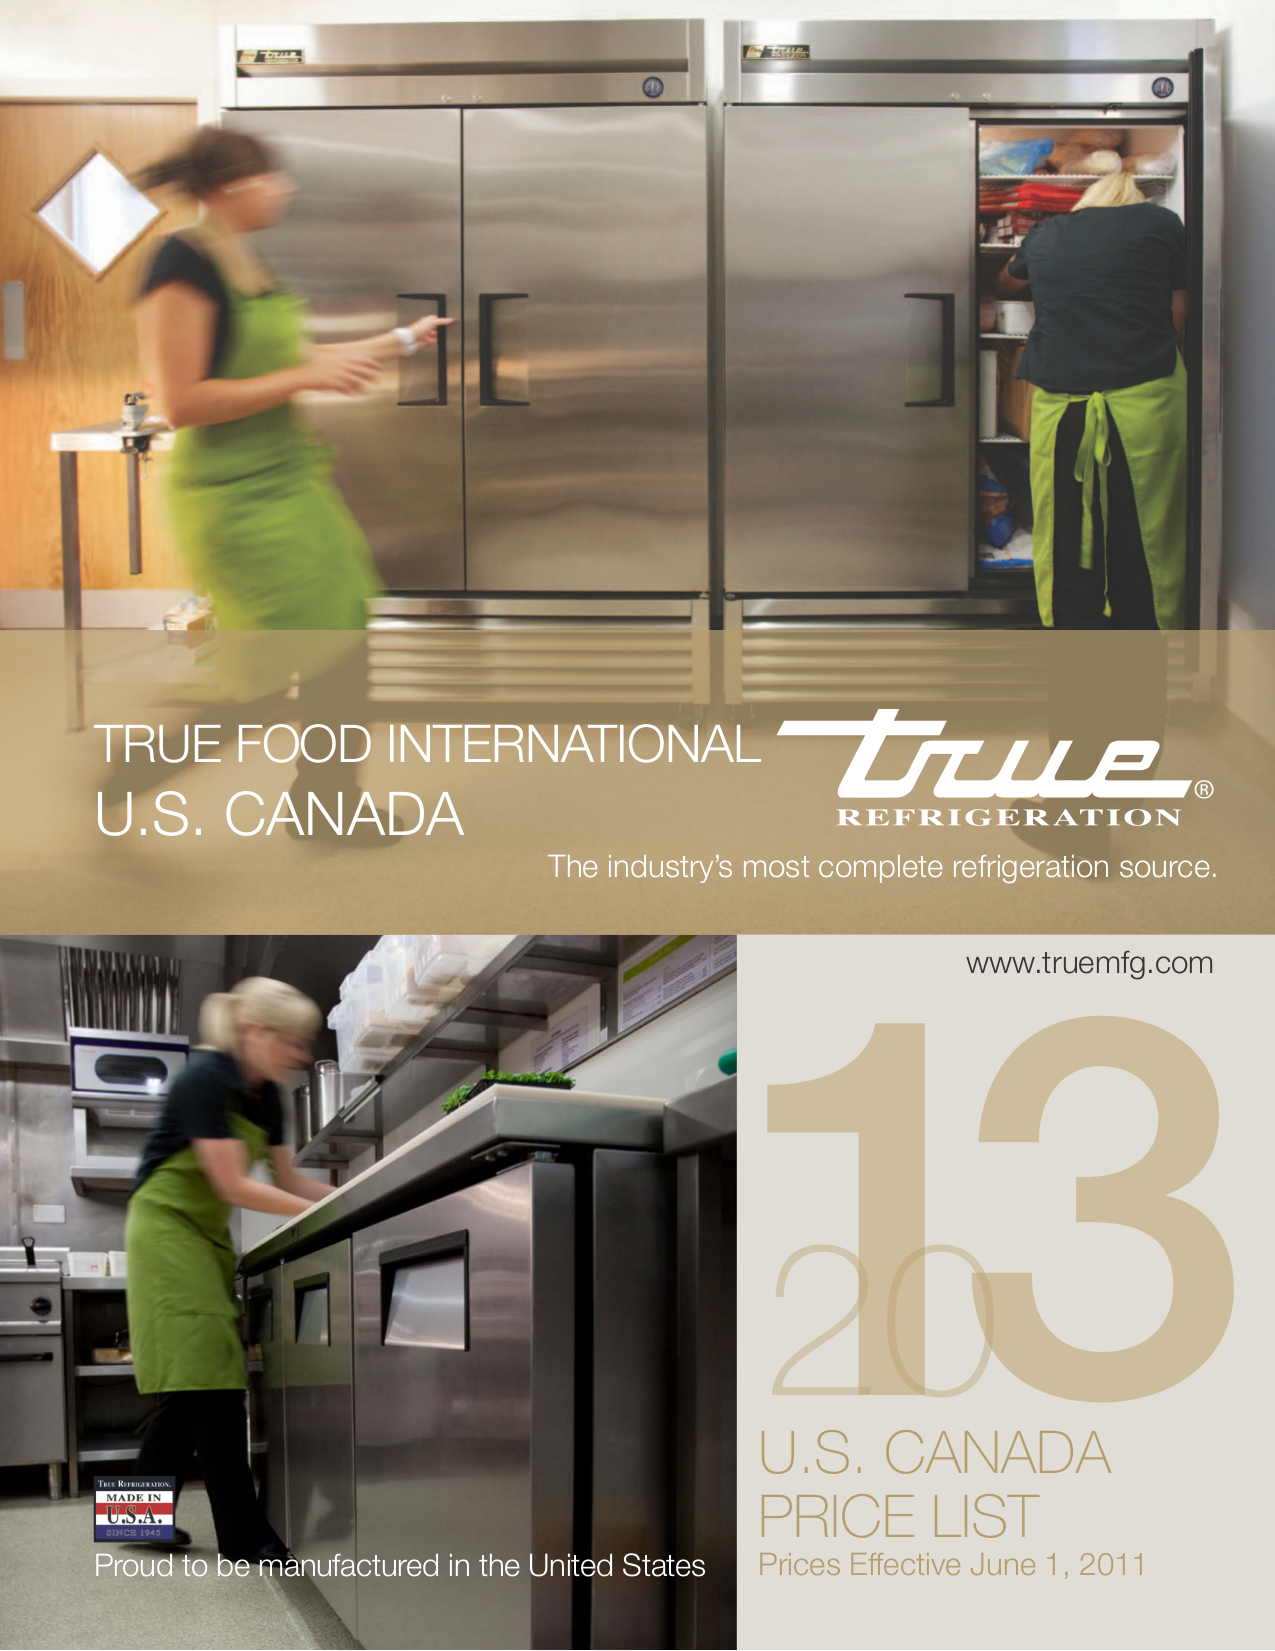 pdf for True Refrigerator TCGR-31 manual